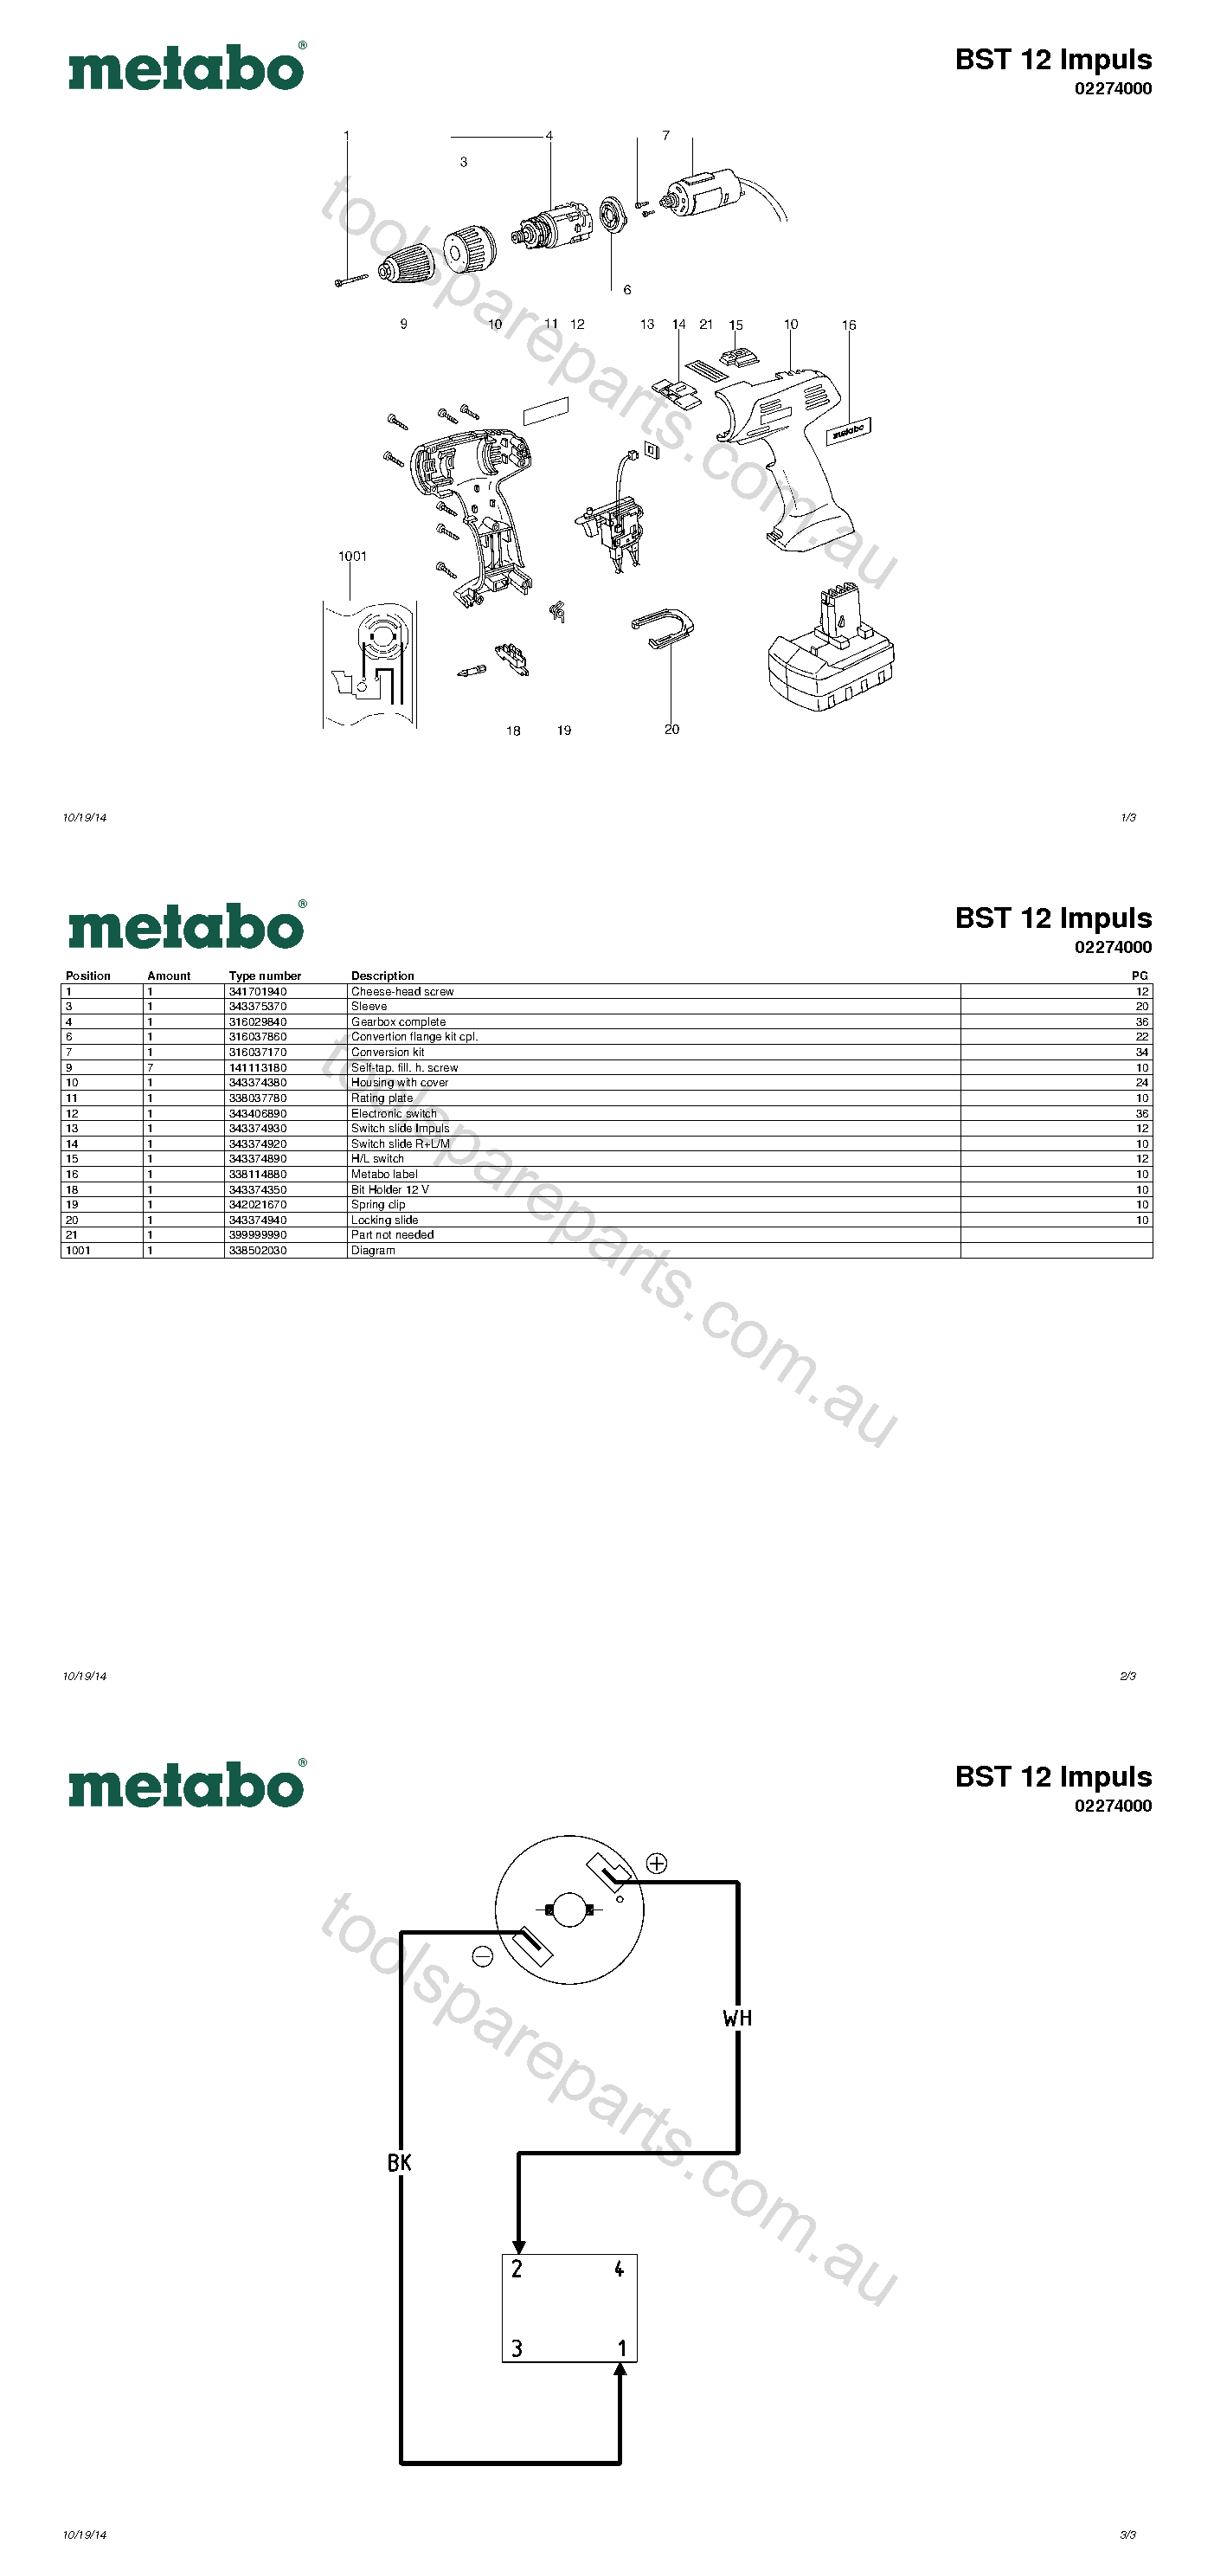 Metabo BST 12 Impuls 02274000  Diagram 1